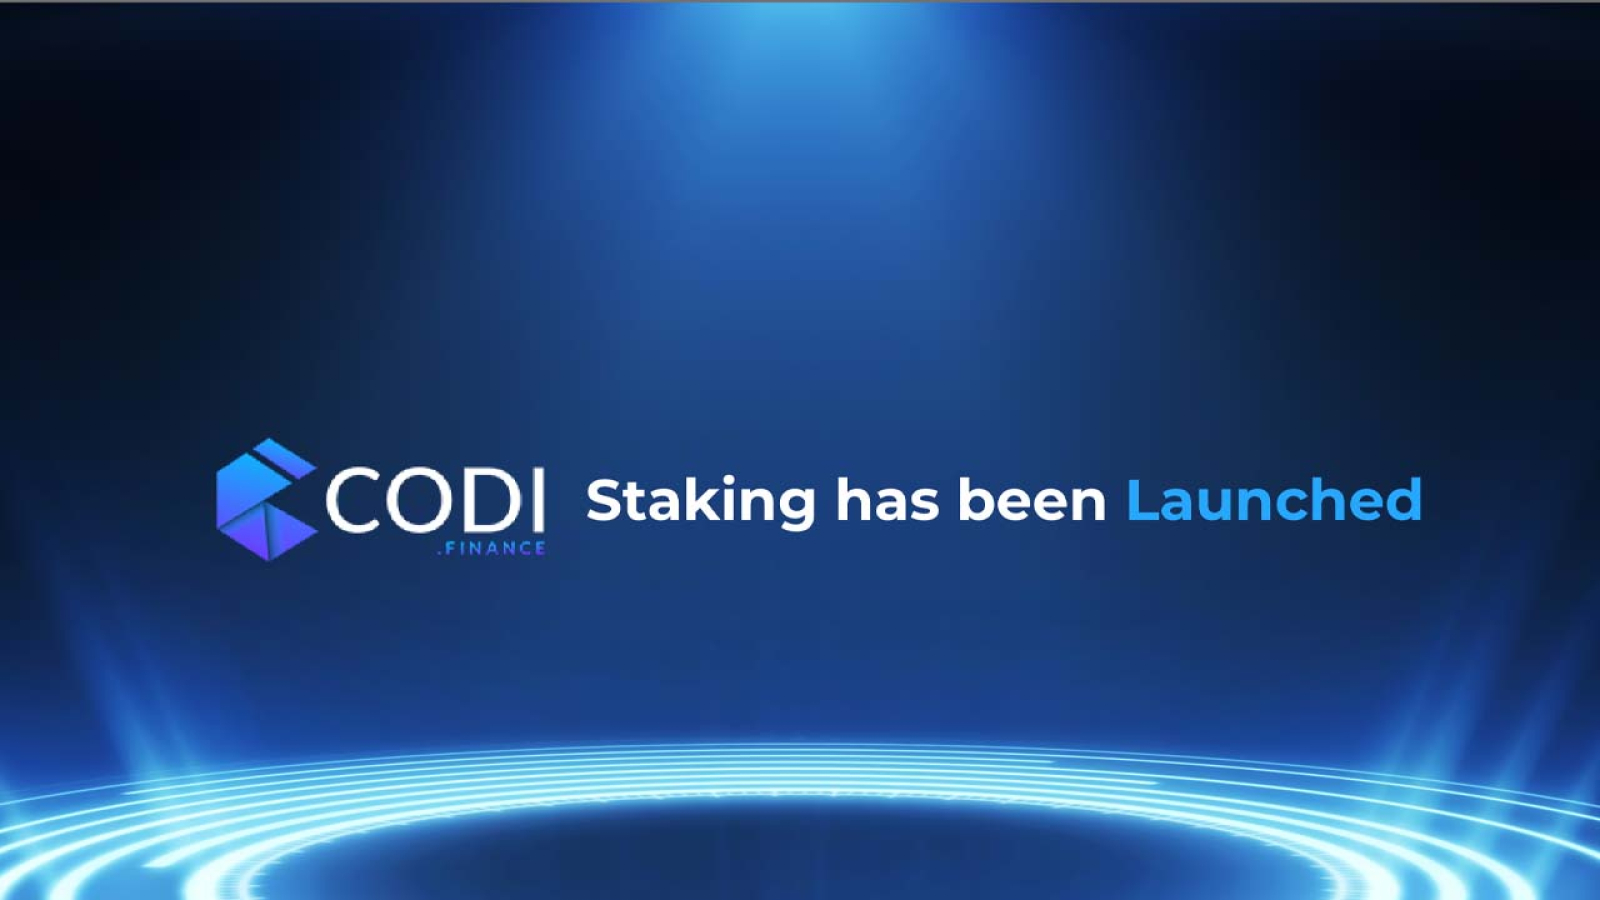 CODI Finance Announces Launch of Staking Platform